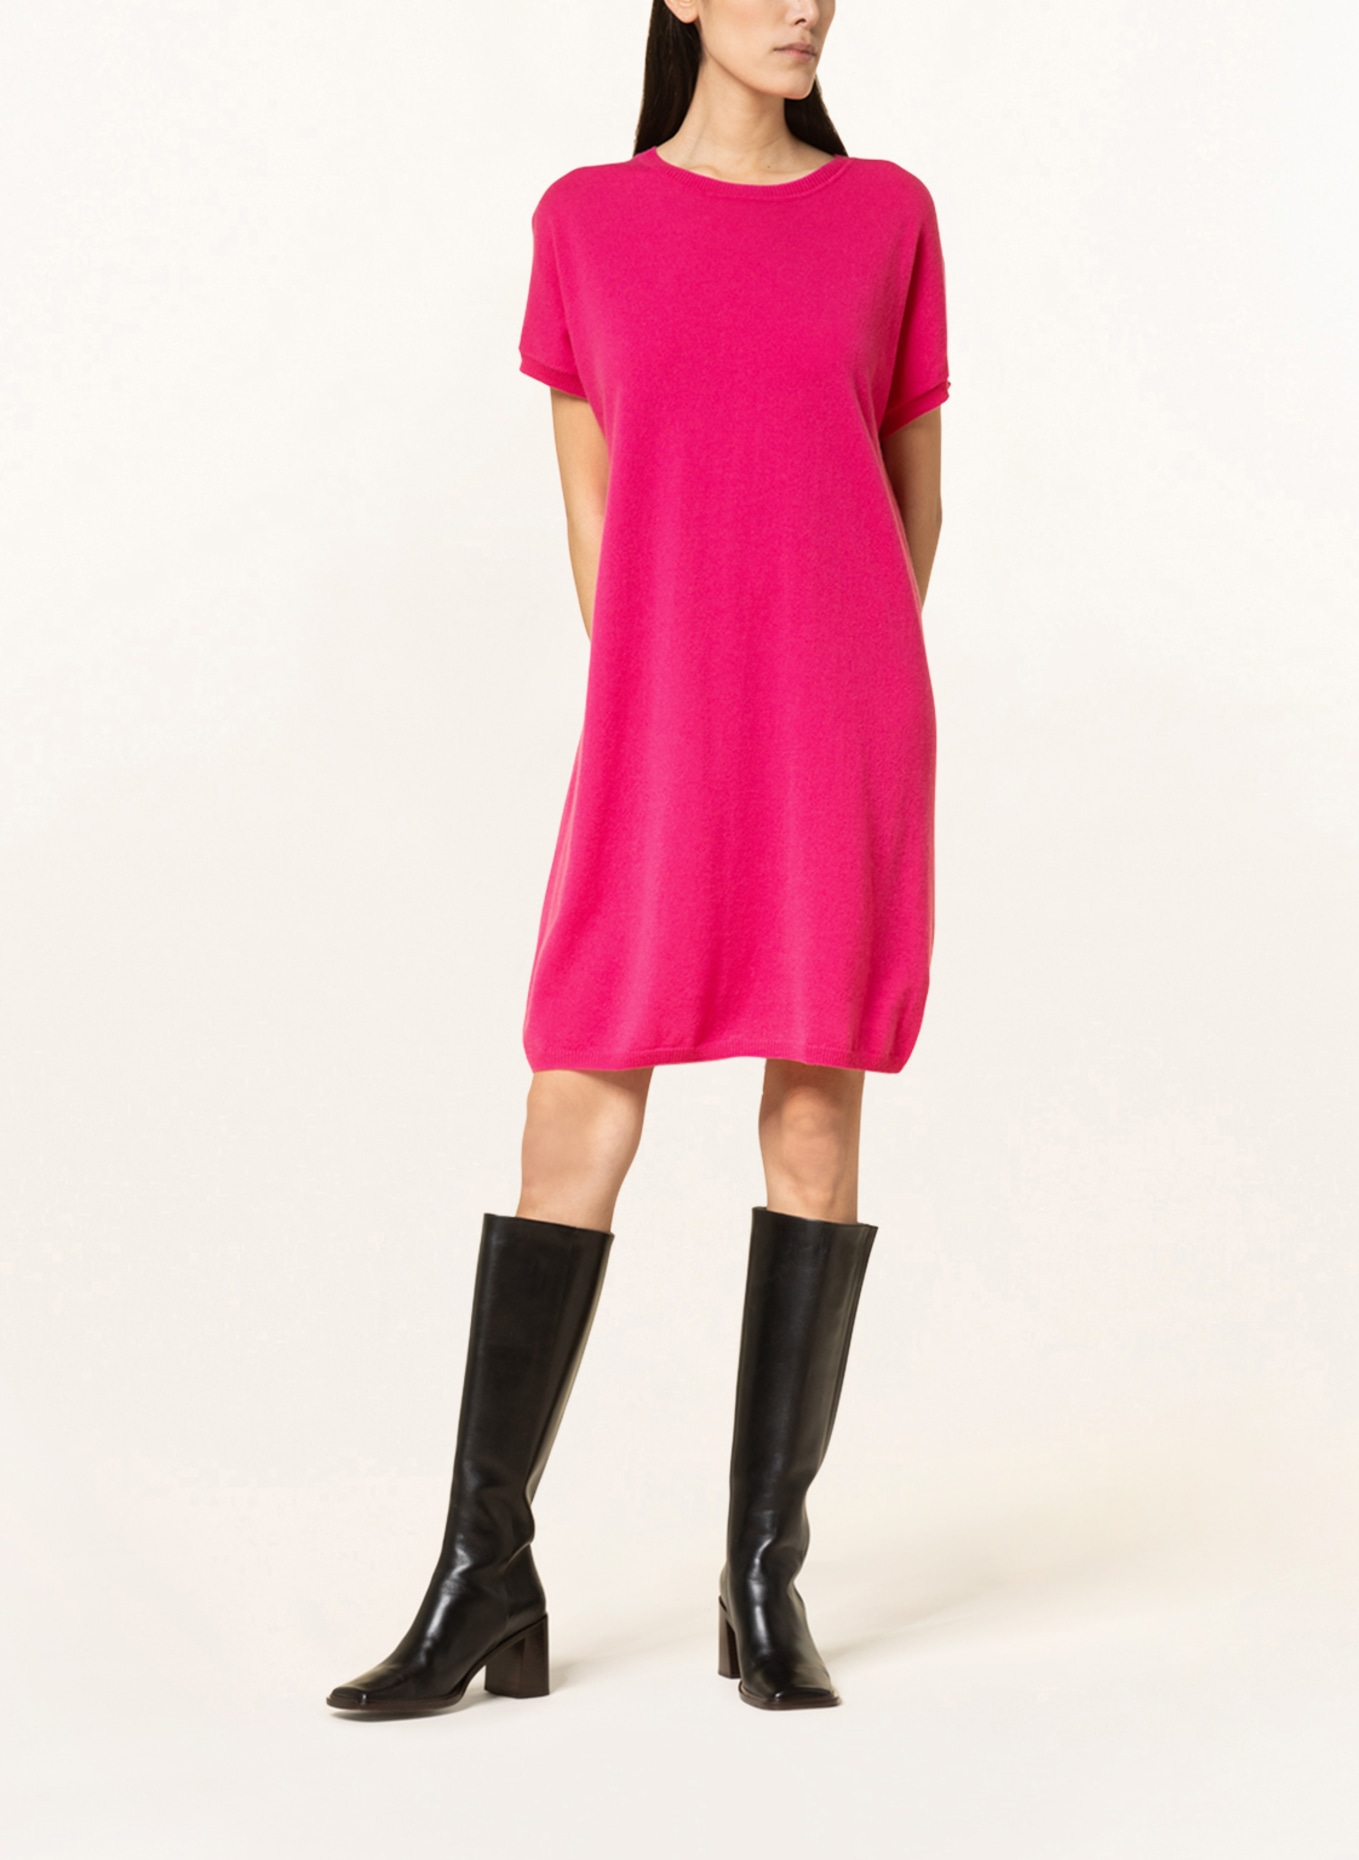 IRIS von ARNIM Cashmere knit dress, Color: FUCHSIA (Image 2)